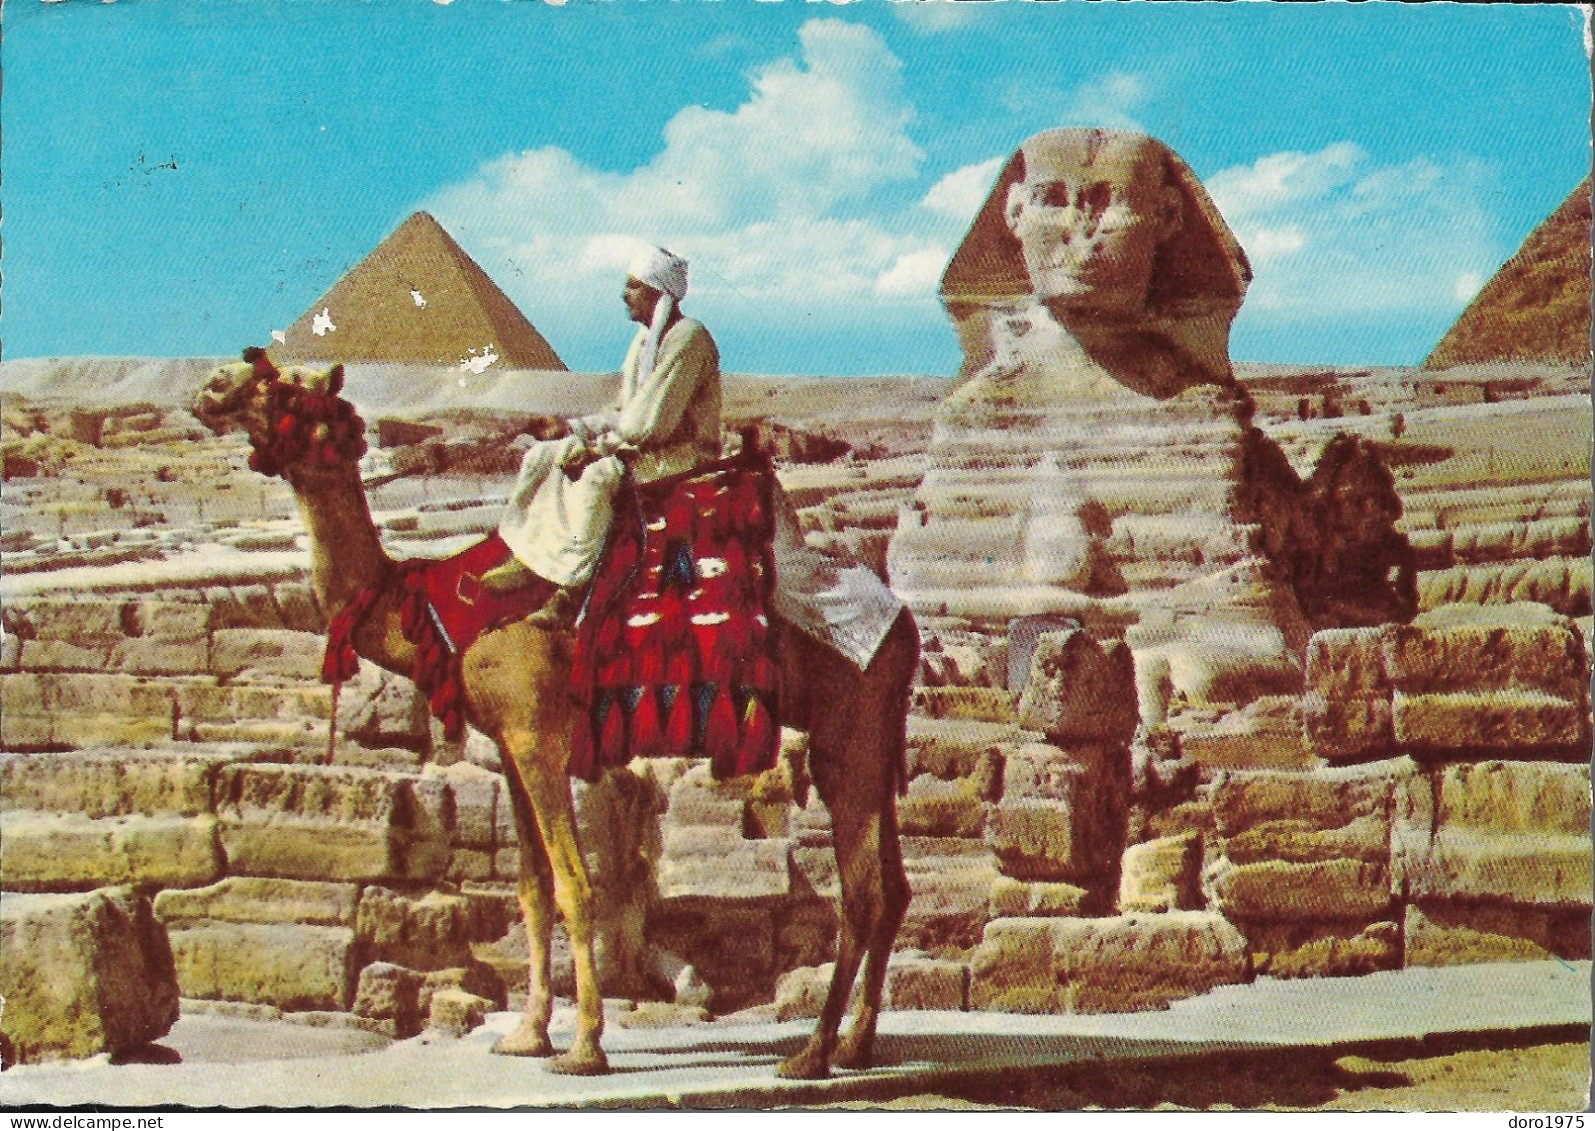 EGYPT - Giza - Pyramids - Sphinx - Used Postcard - Gizeh